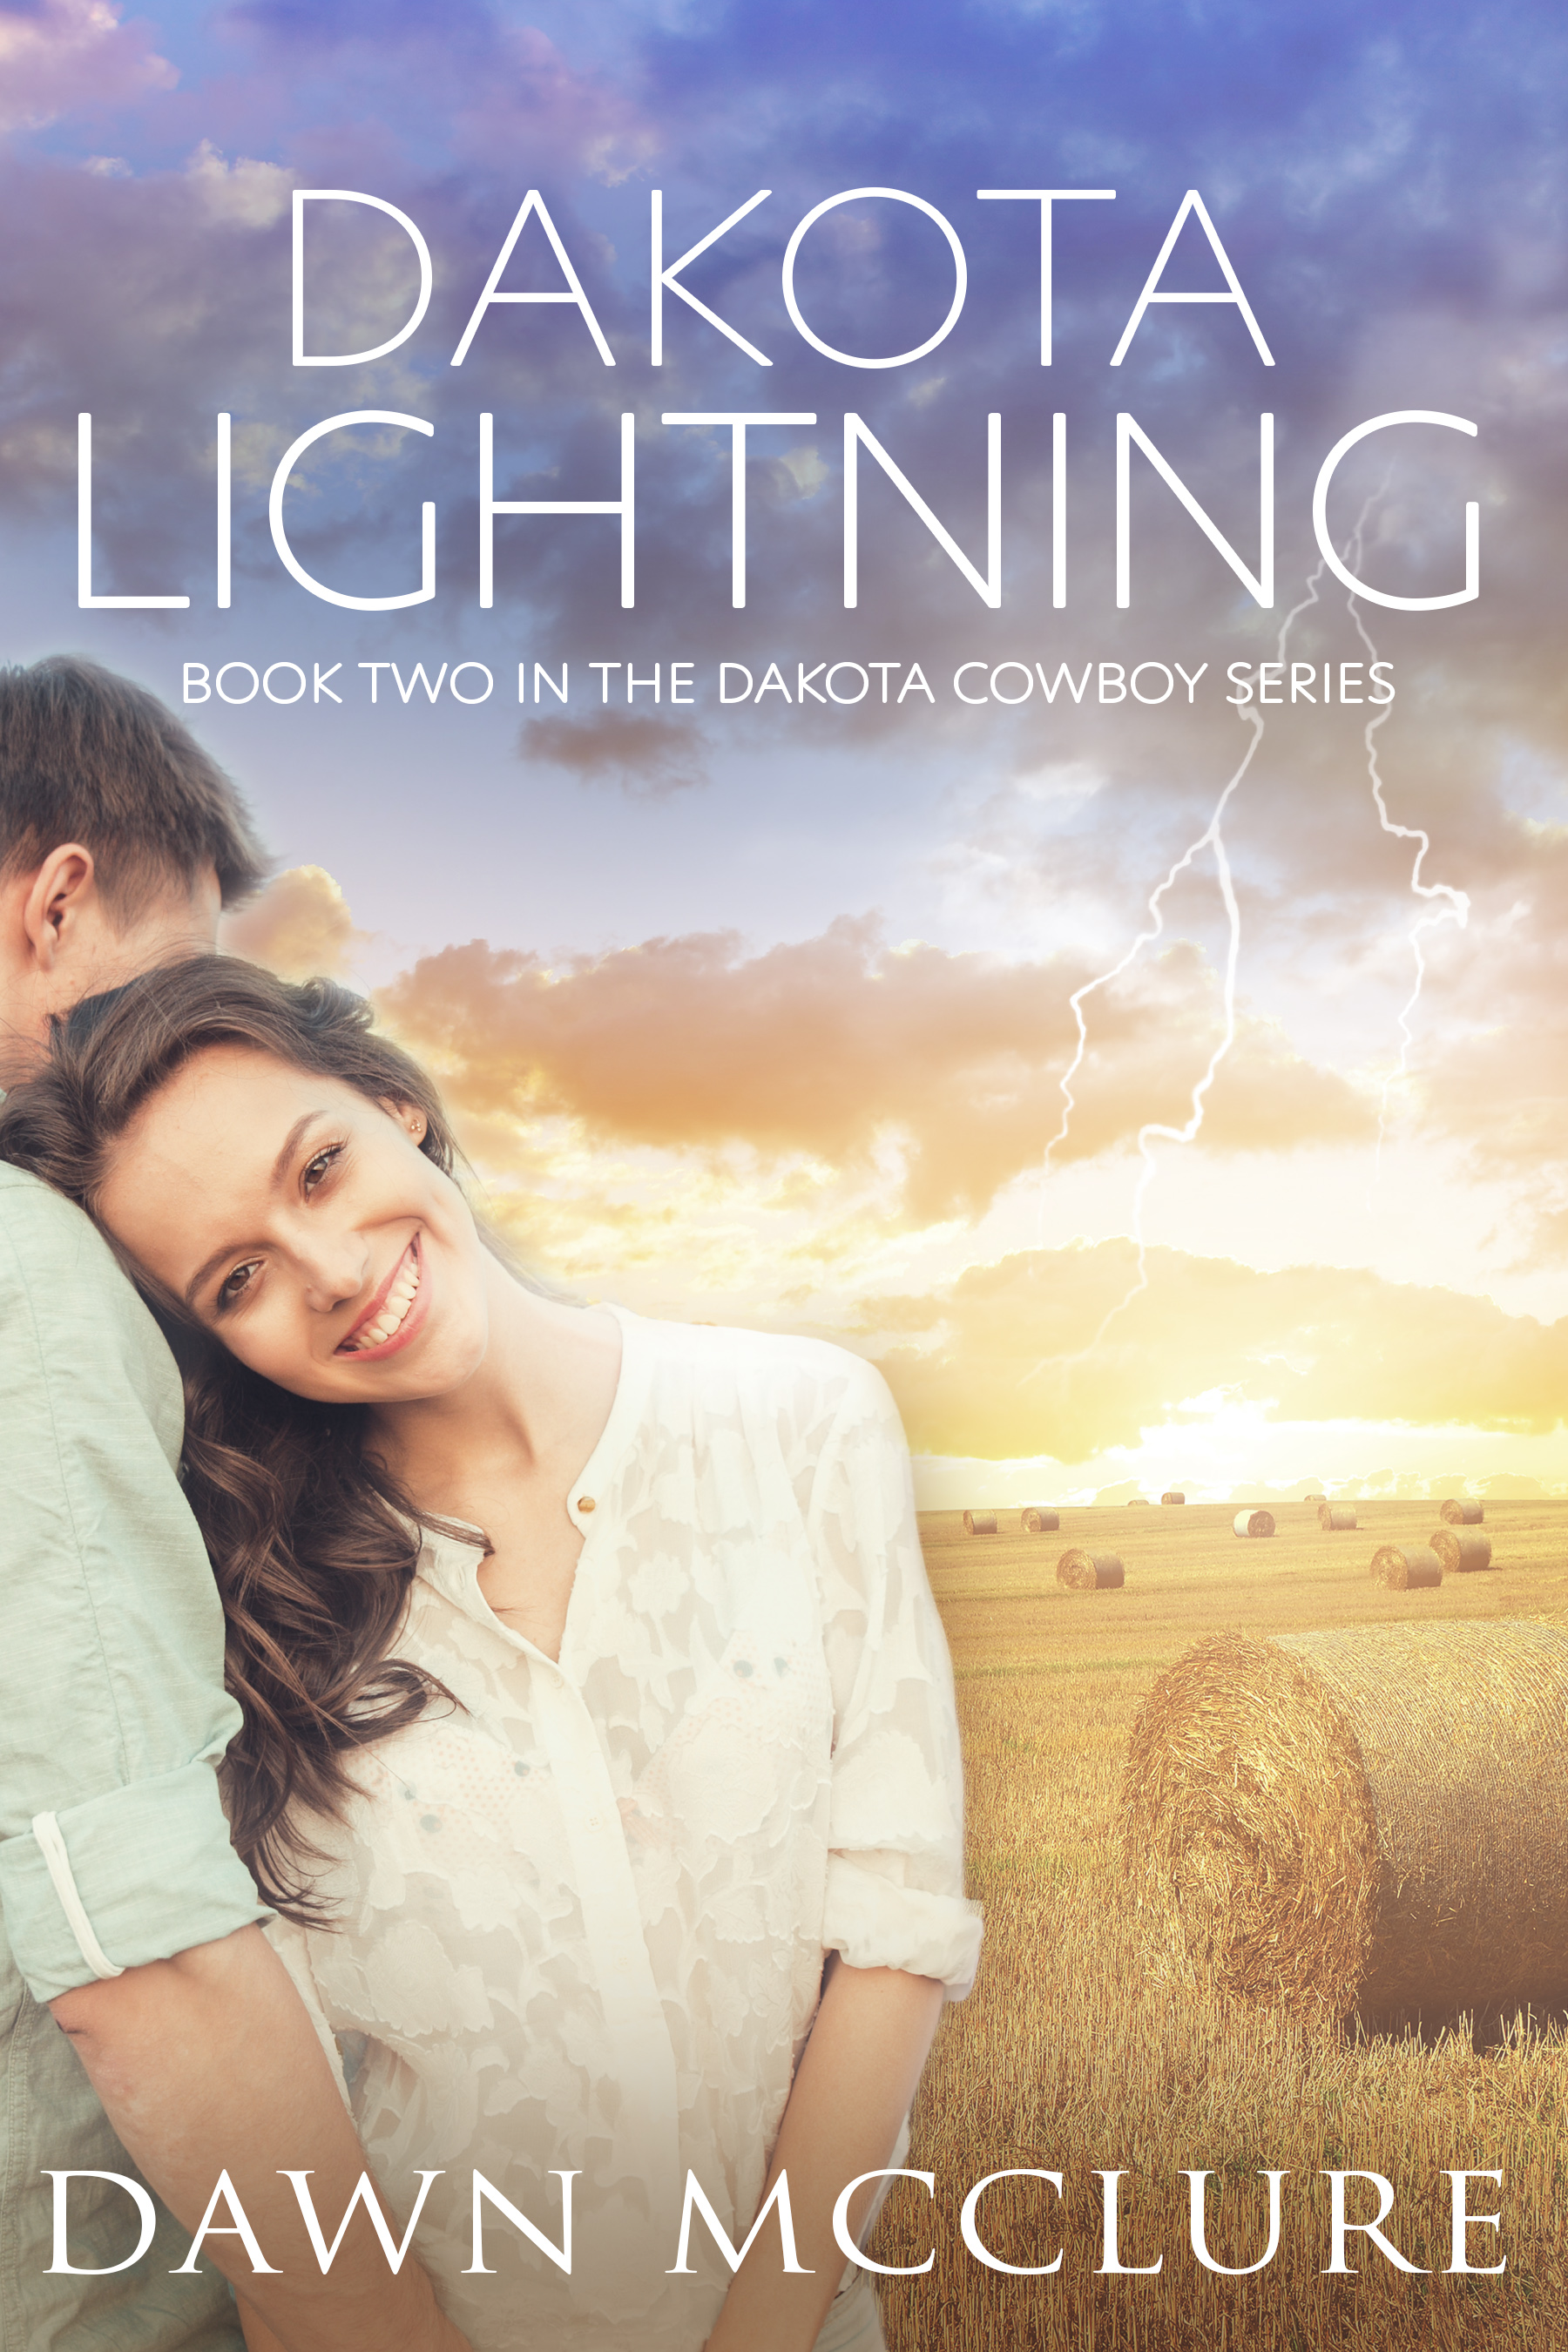 Dakota Lightning